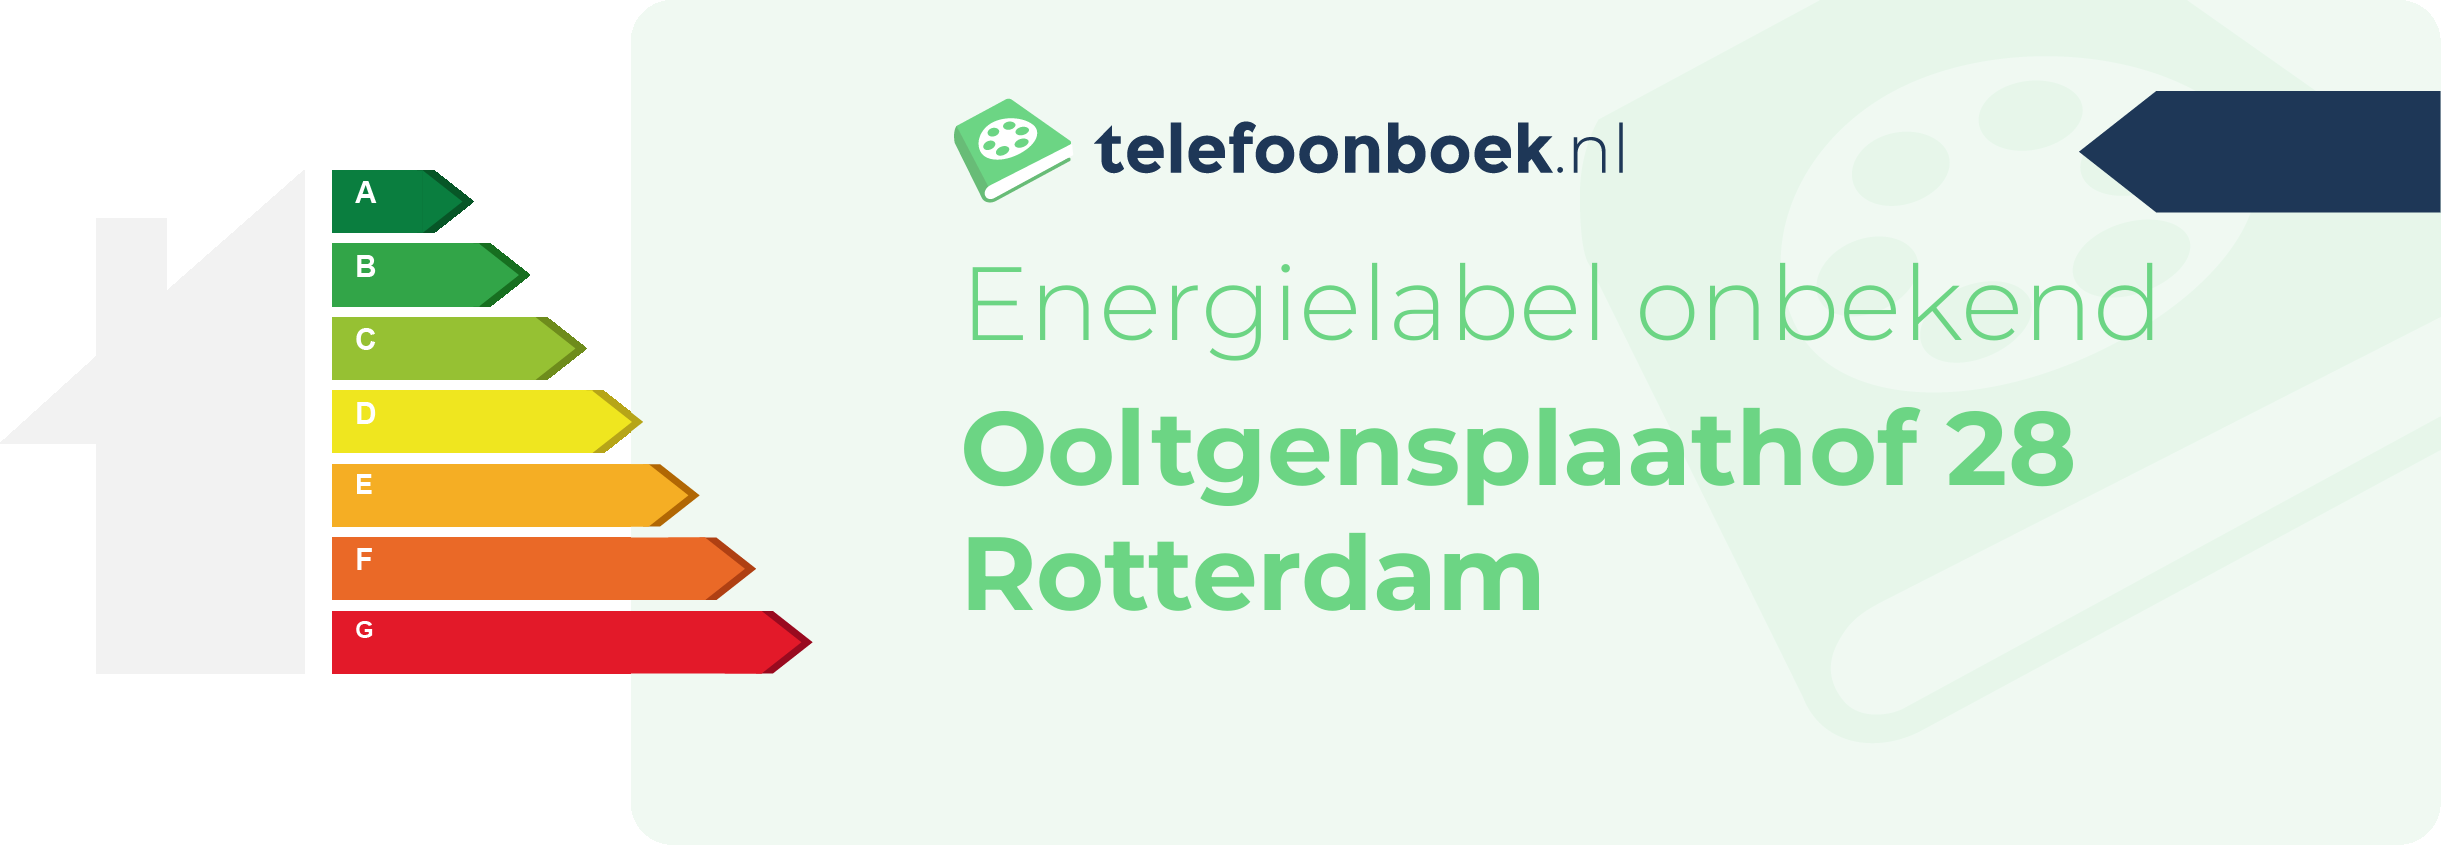 Energielabel Ooltgensplaathof 28 Rotterdam